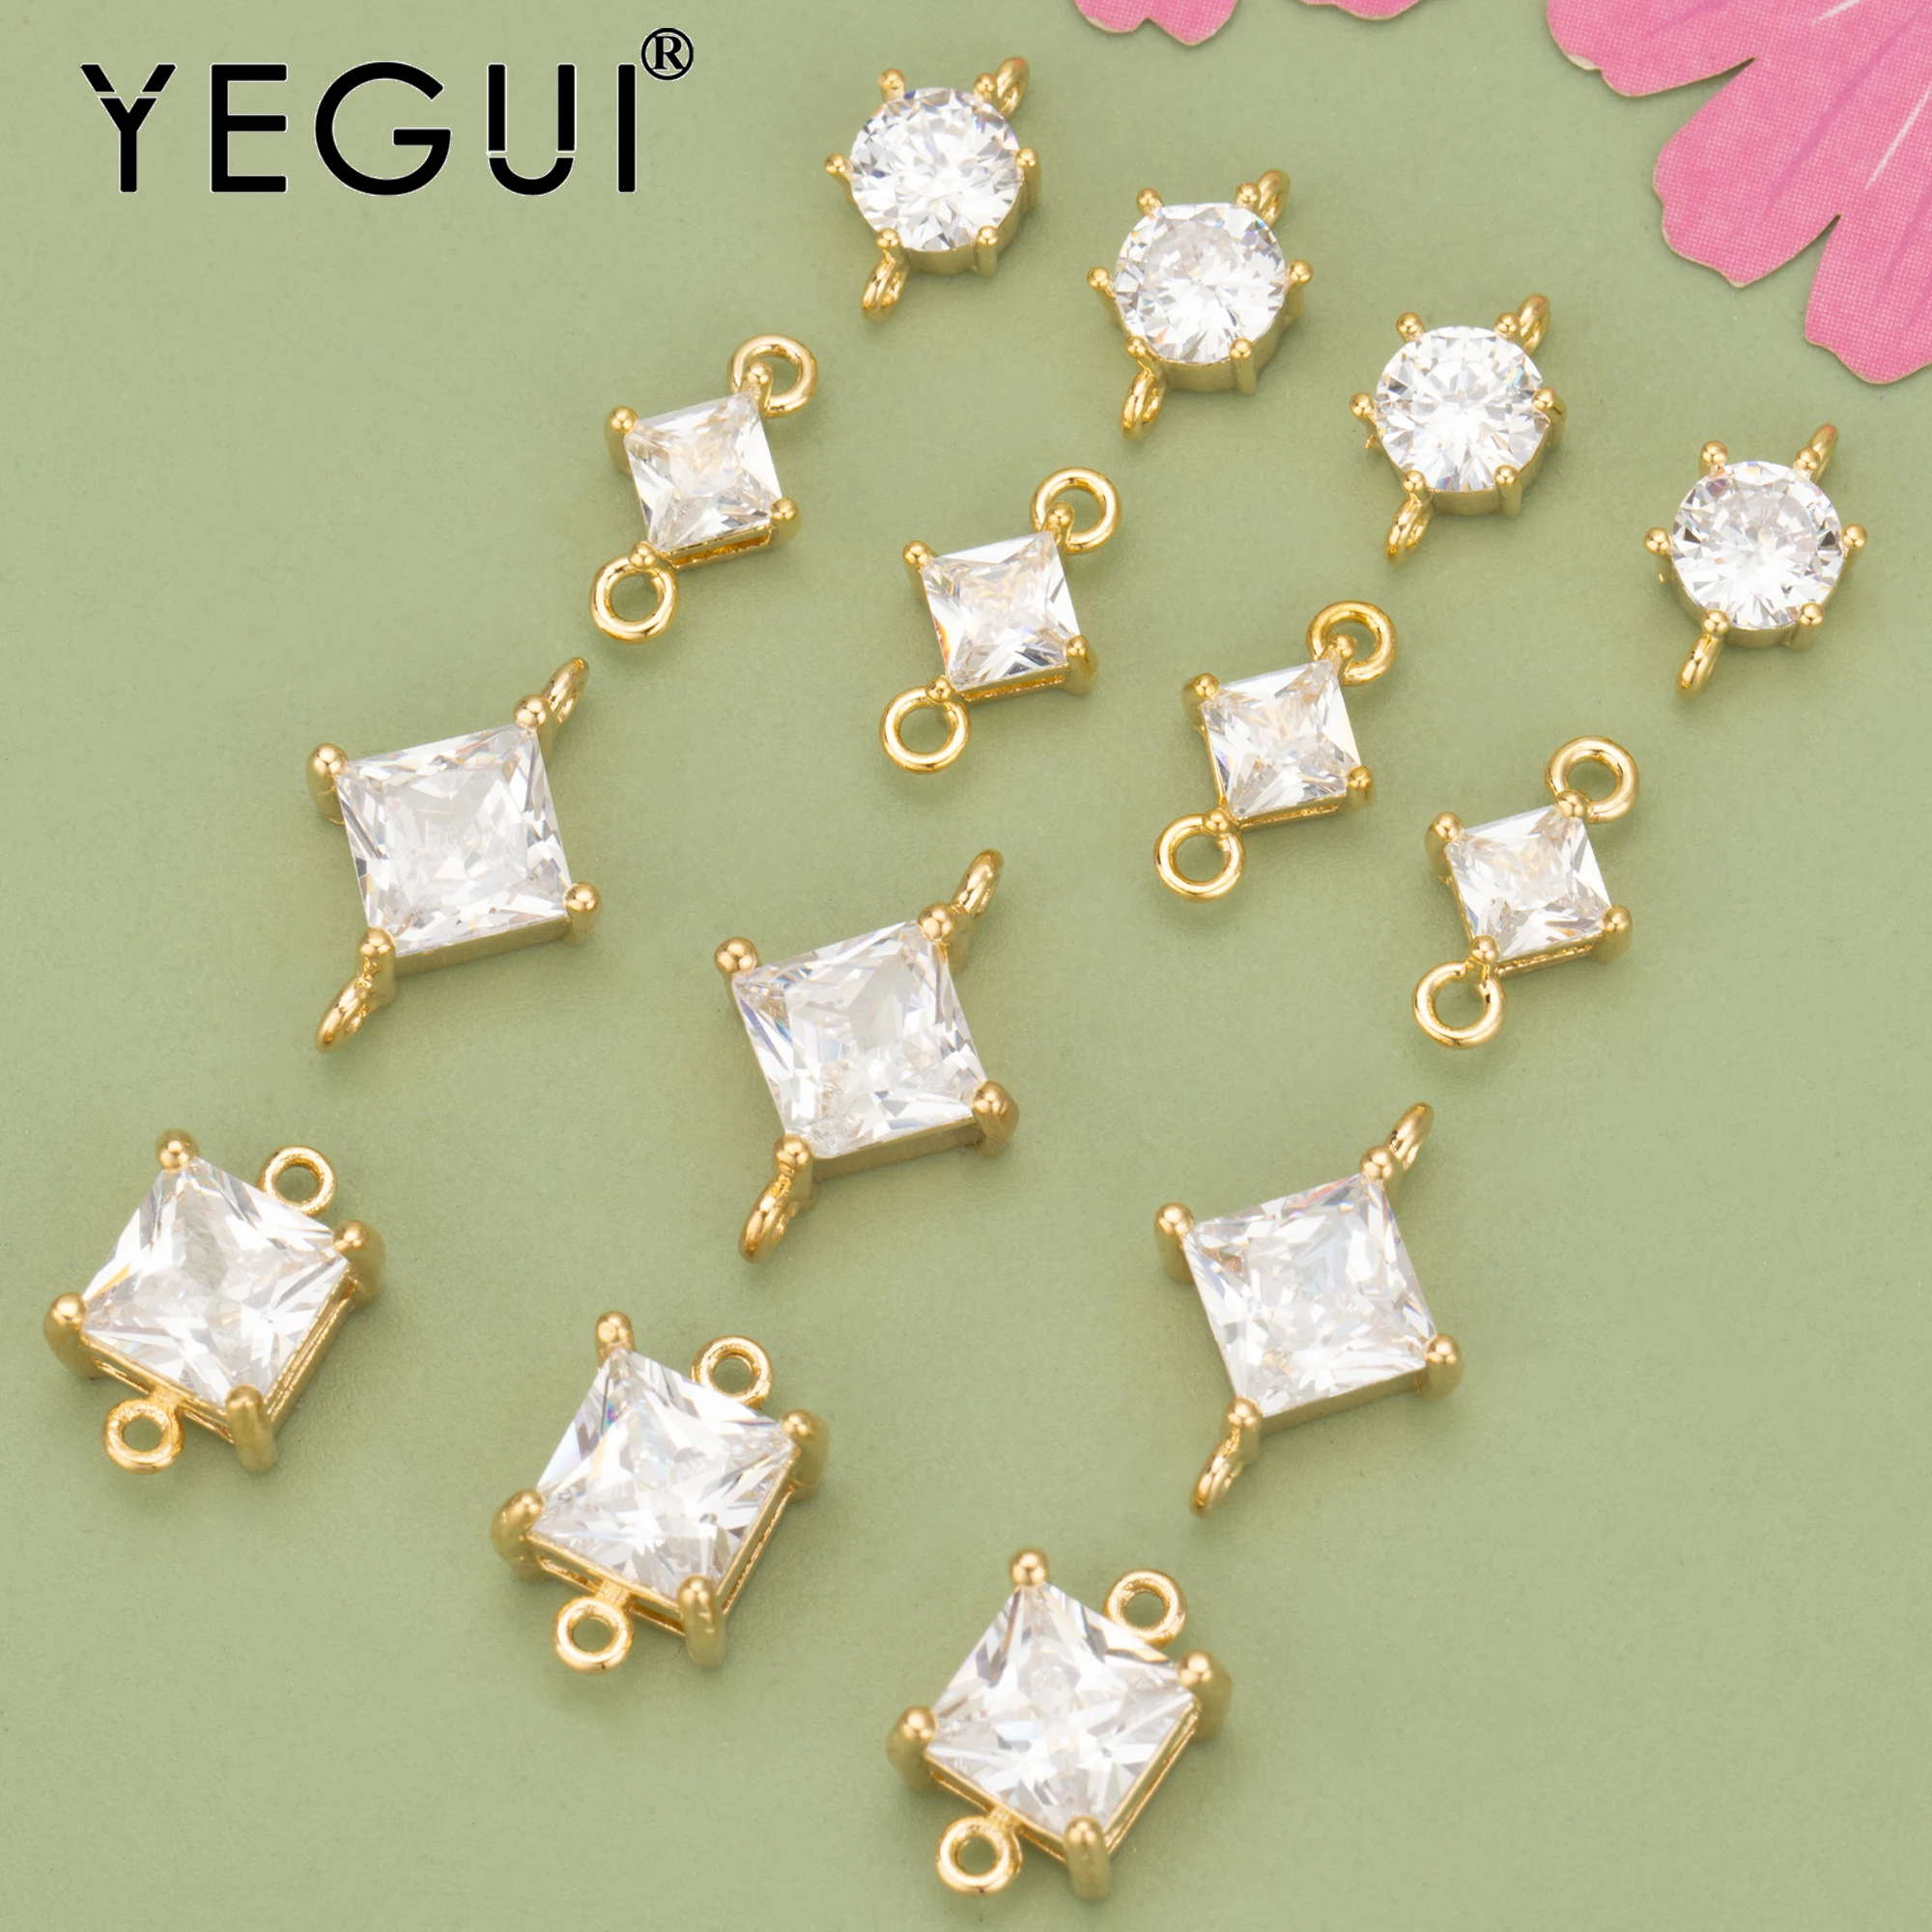 

YEGUI MC75,jewelry accessories,18k gold rhodium plated,nickel free,copper,zircons,charms,diy pendants,jewelry making,10pcs/lot